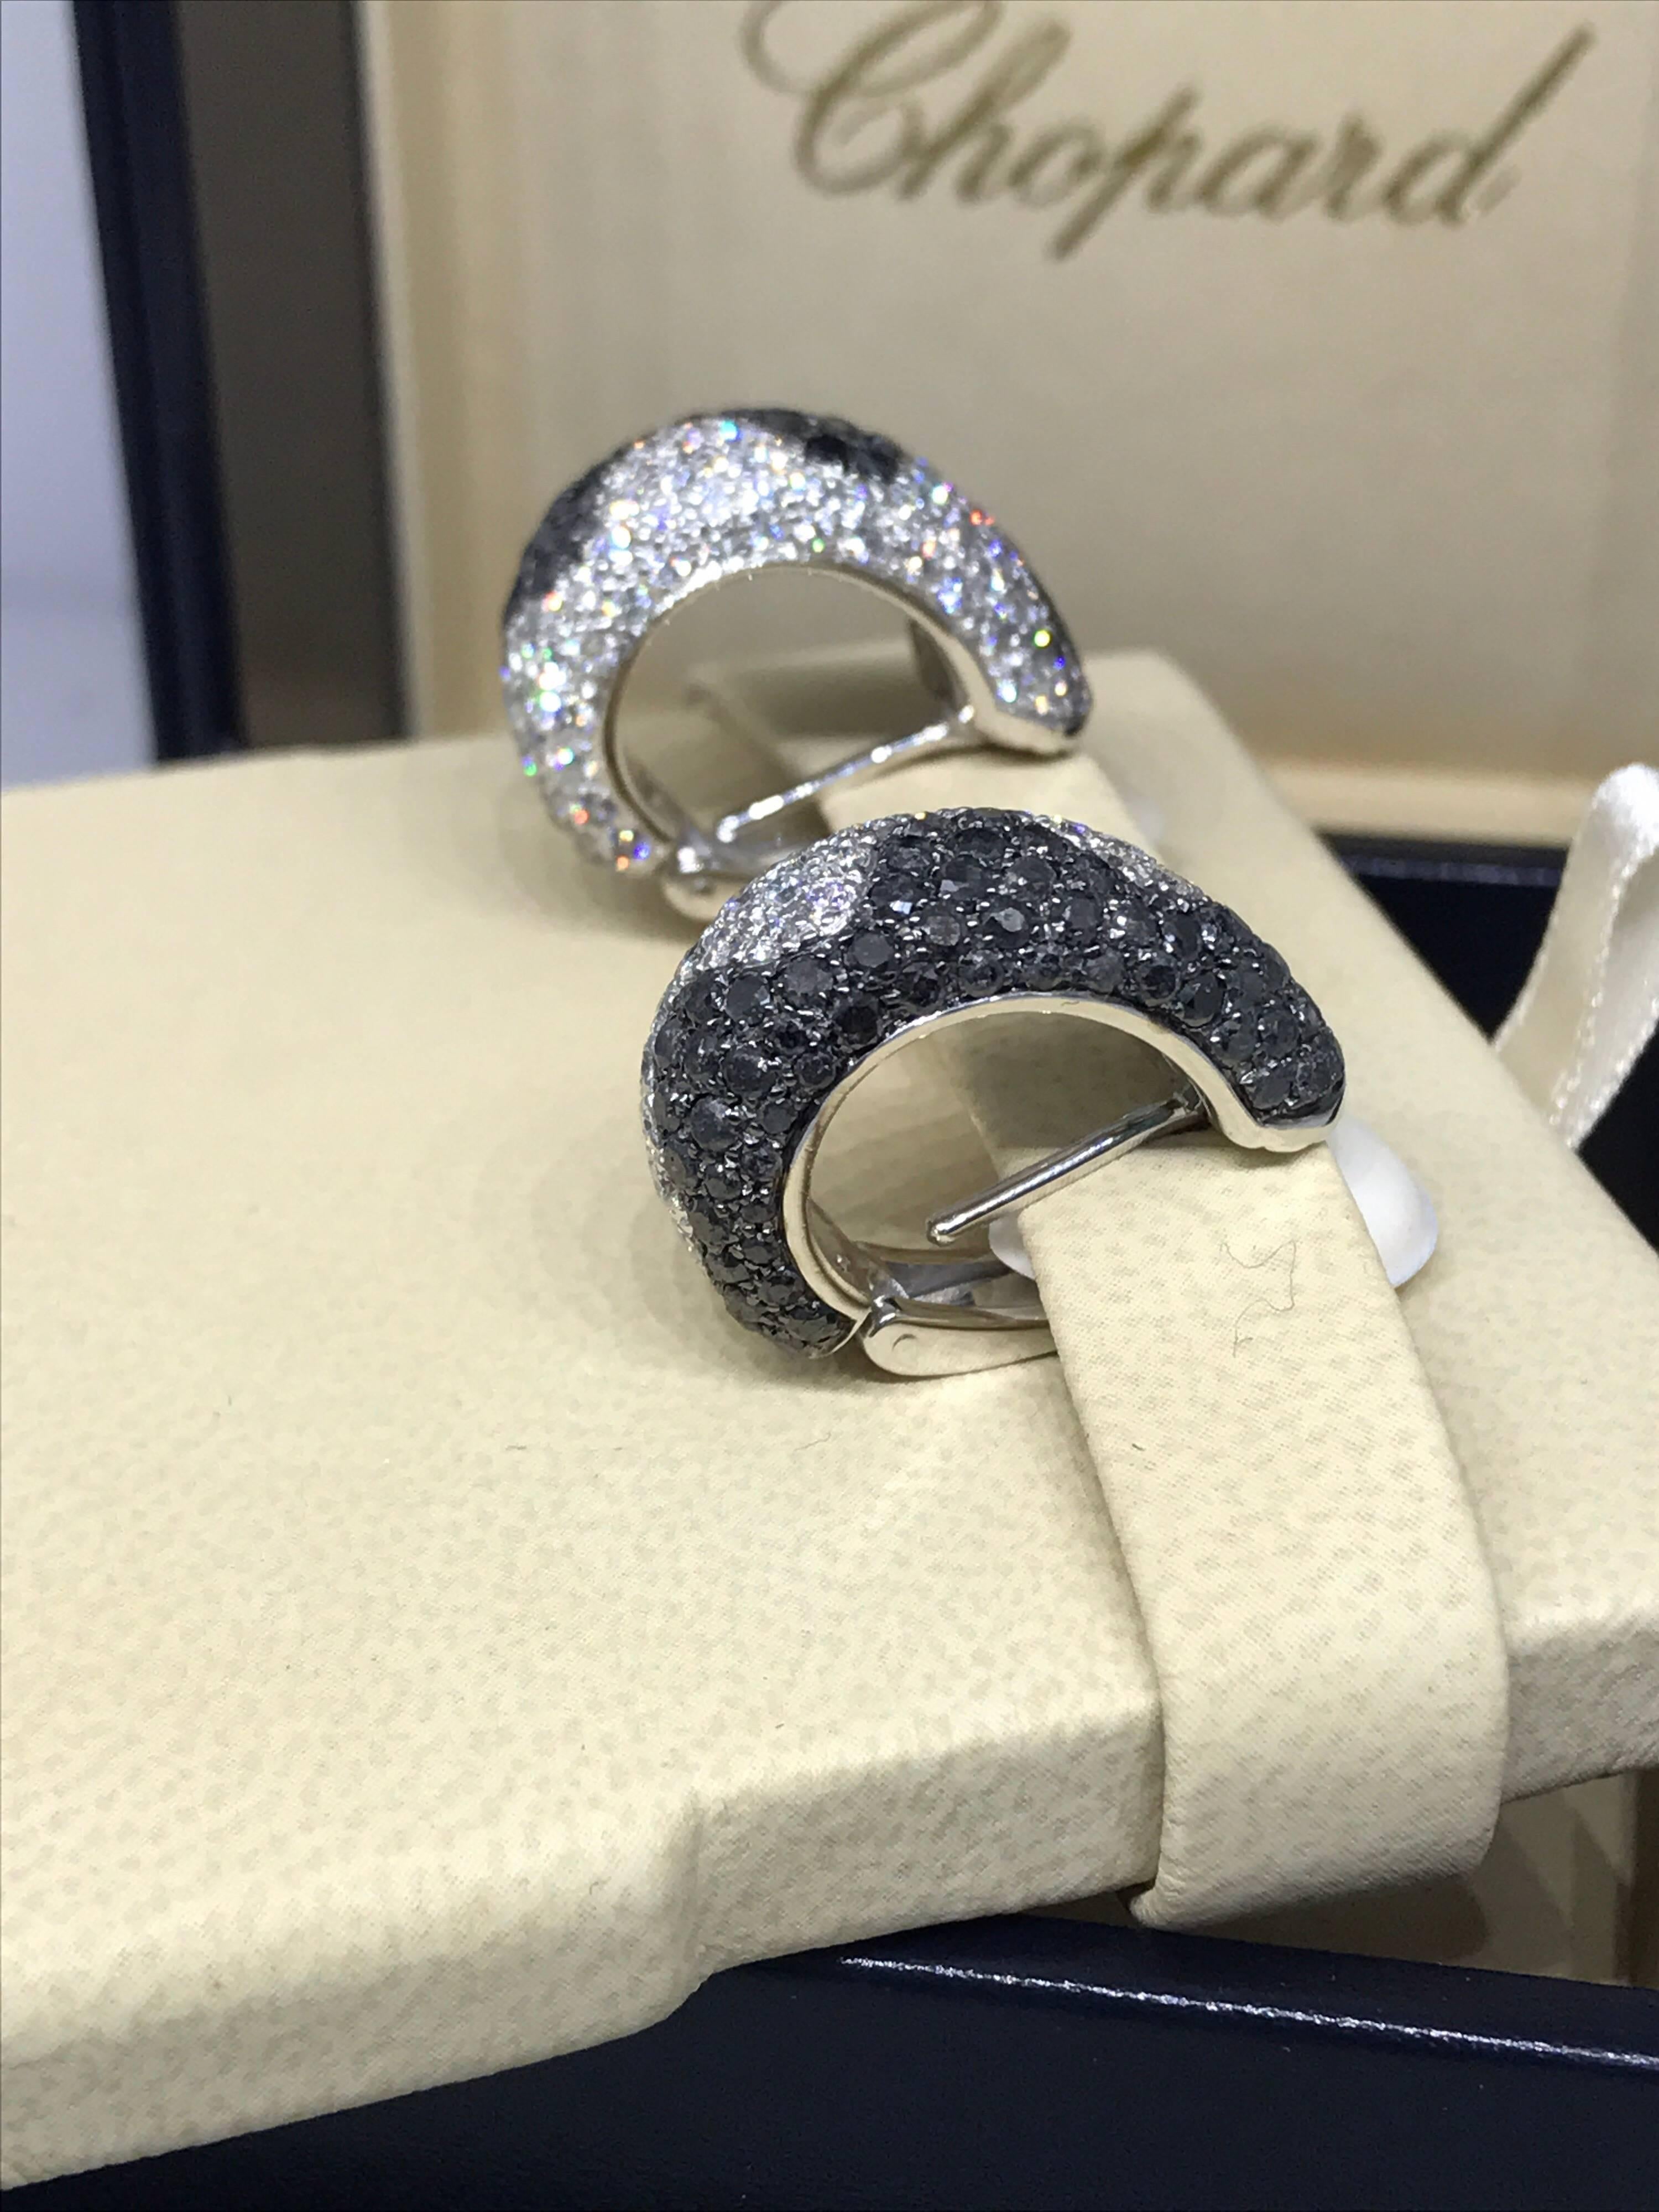 Chopard Women's 18 Karat White Gold Black and White Diamond Earrings 84/4102 For Sale 2